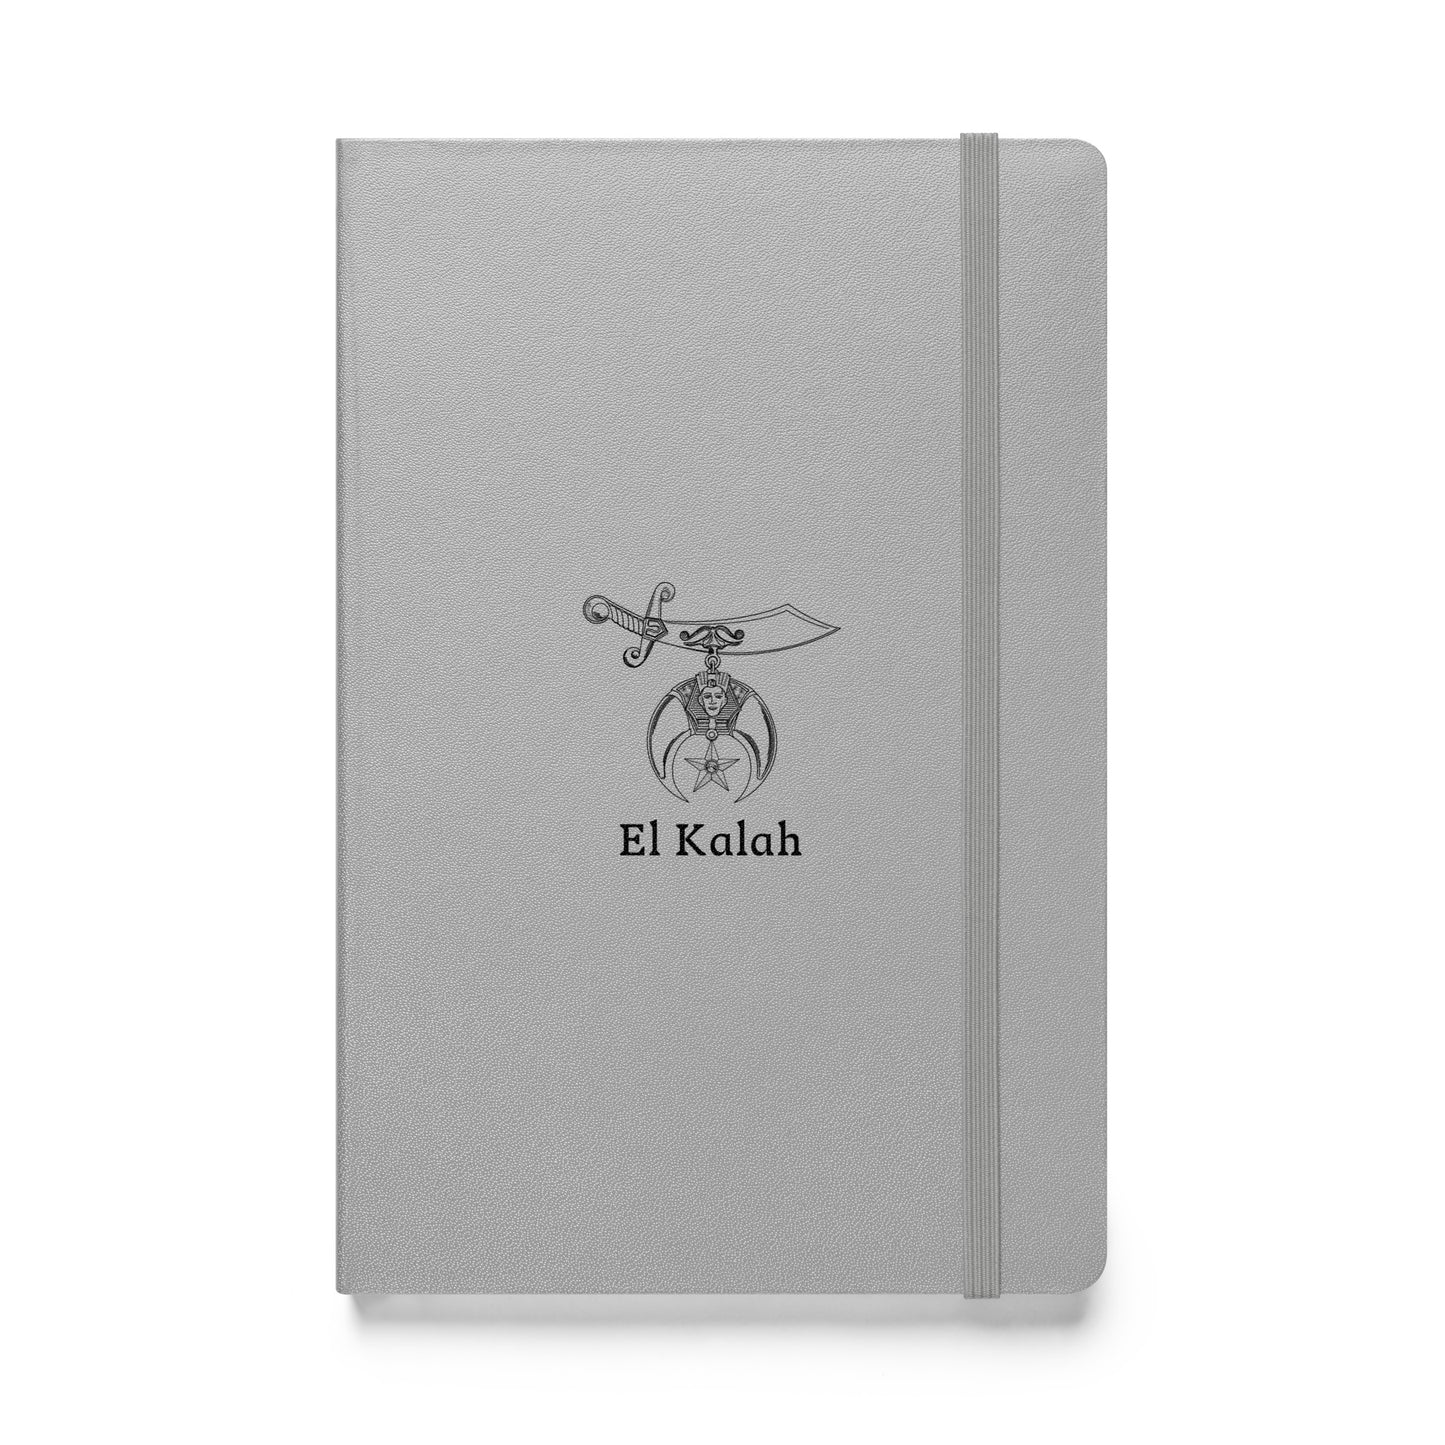 EL KALAH Hardcover bound notebook